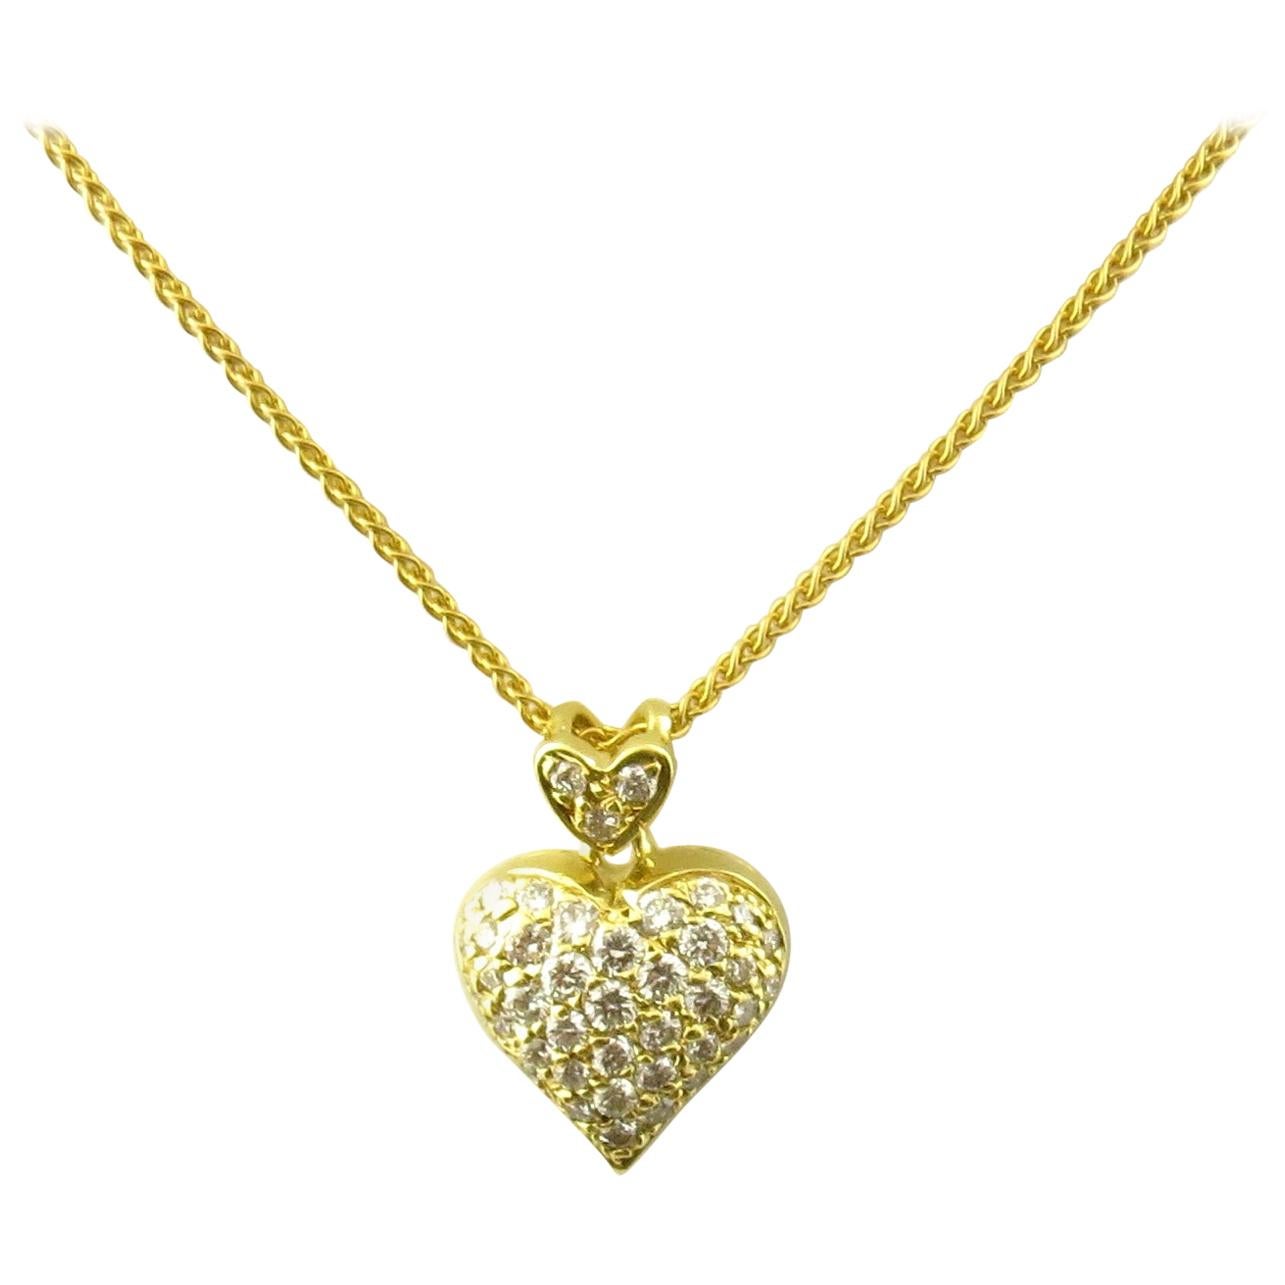 18 Karat Yellow Gold Diamond Heart Pendant Necklace